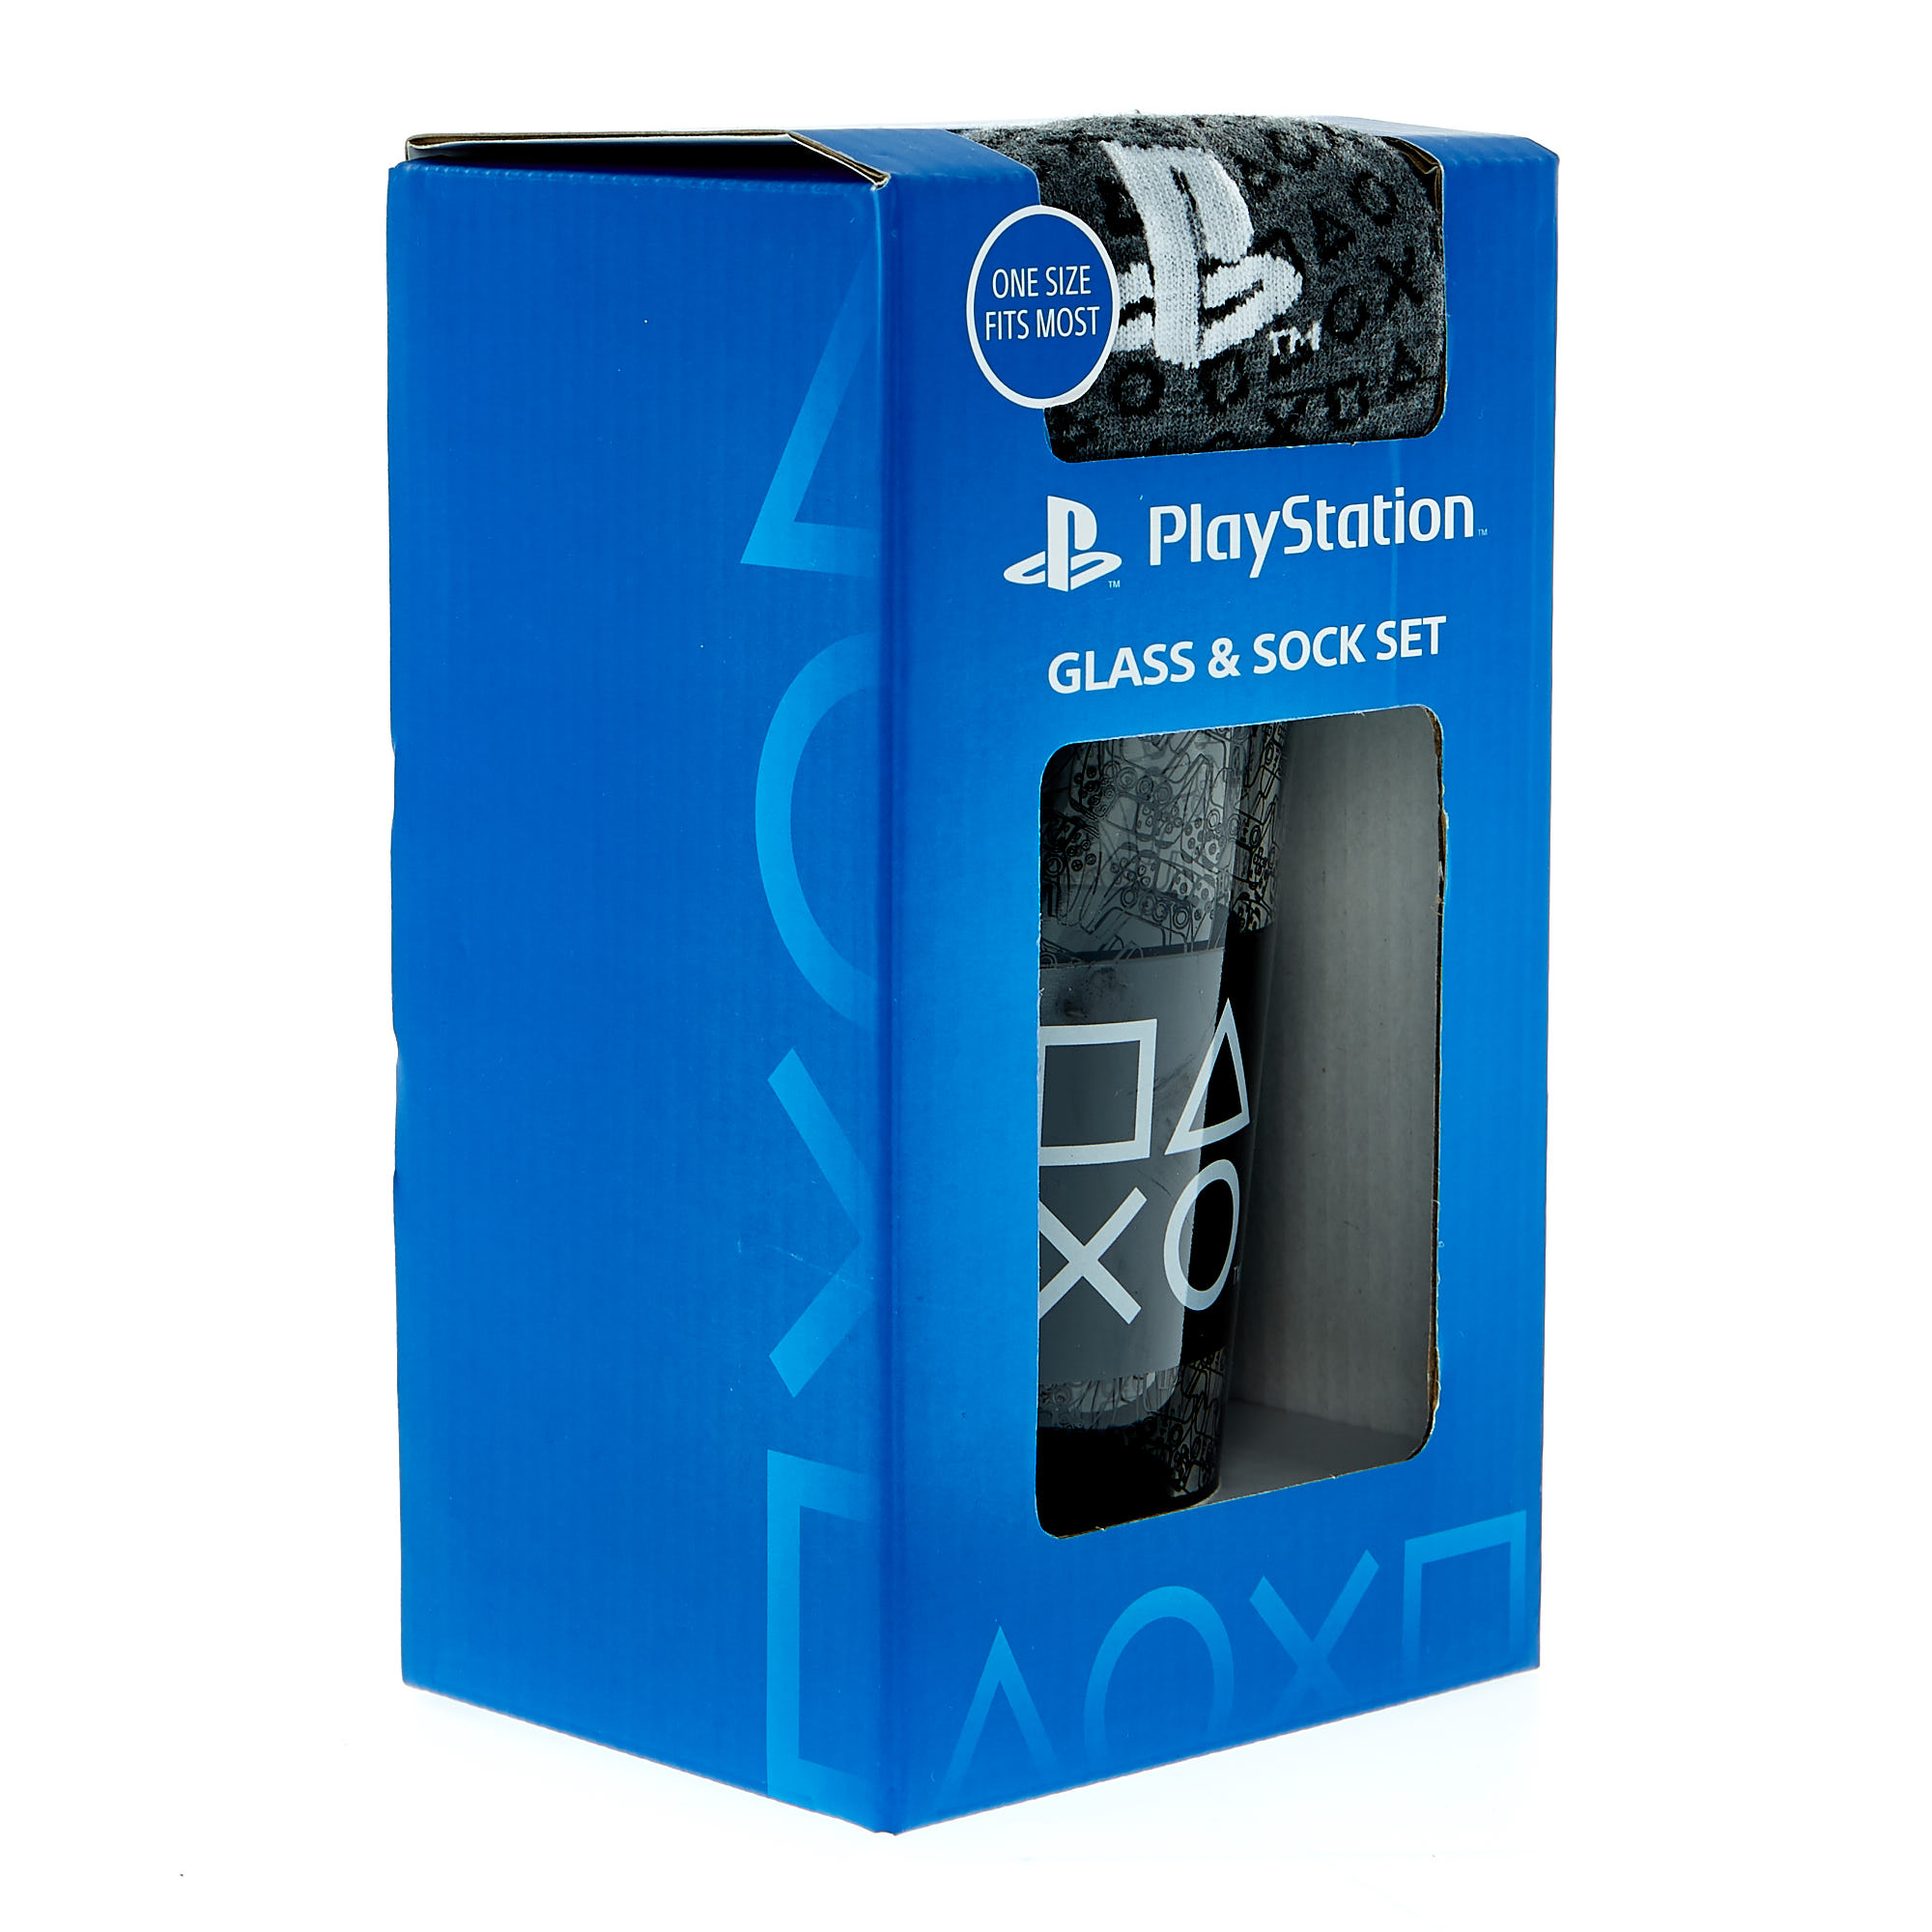 PlayStation Glass & Socks Set